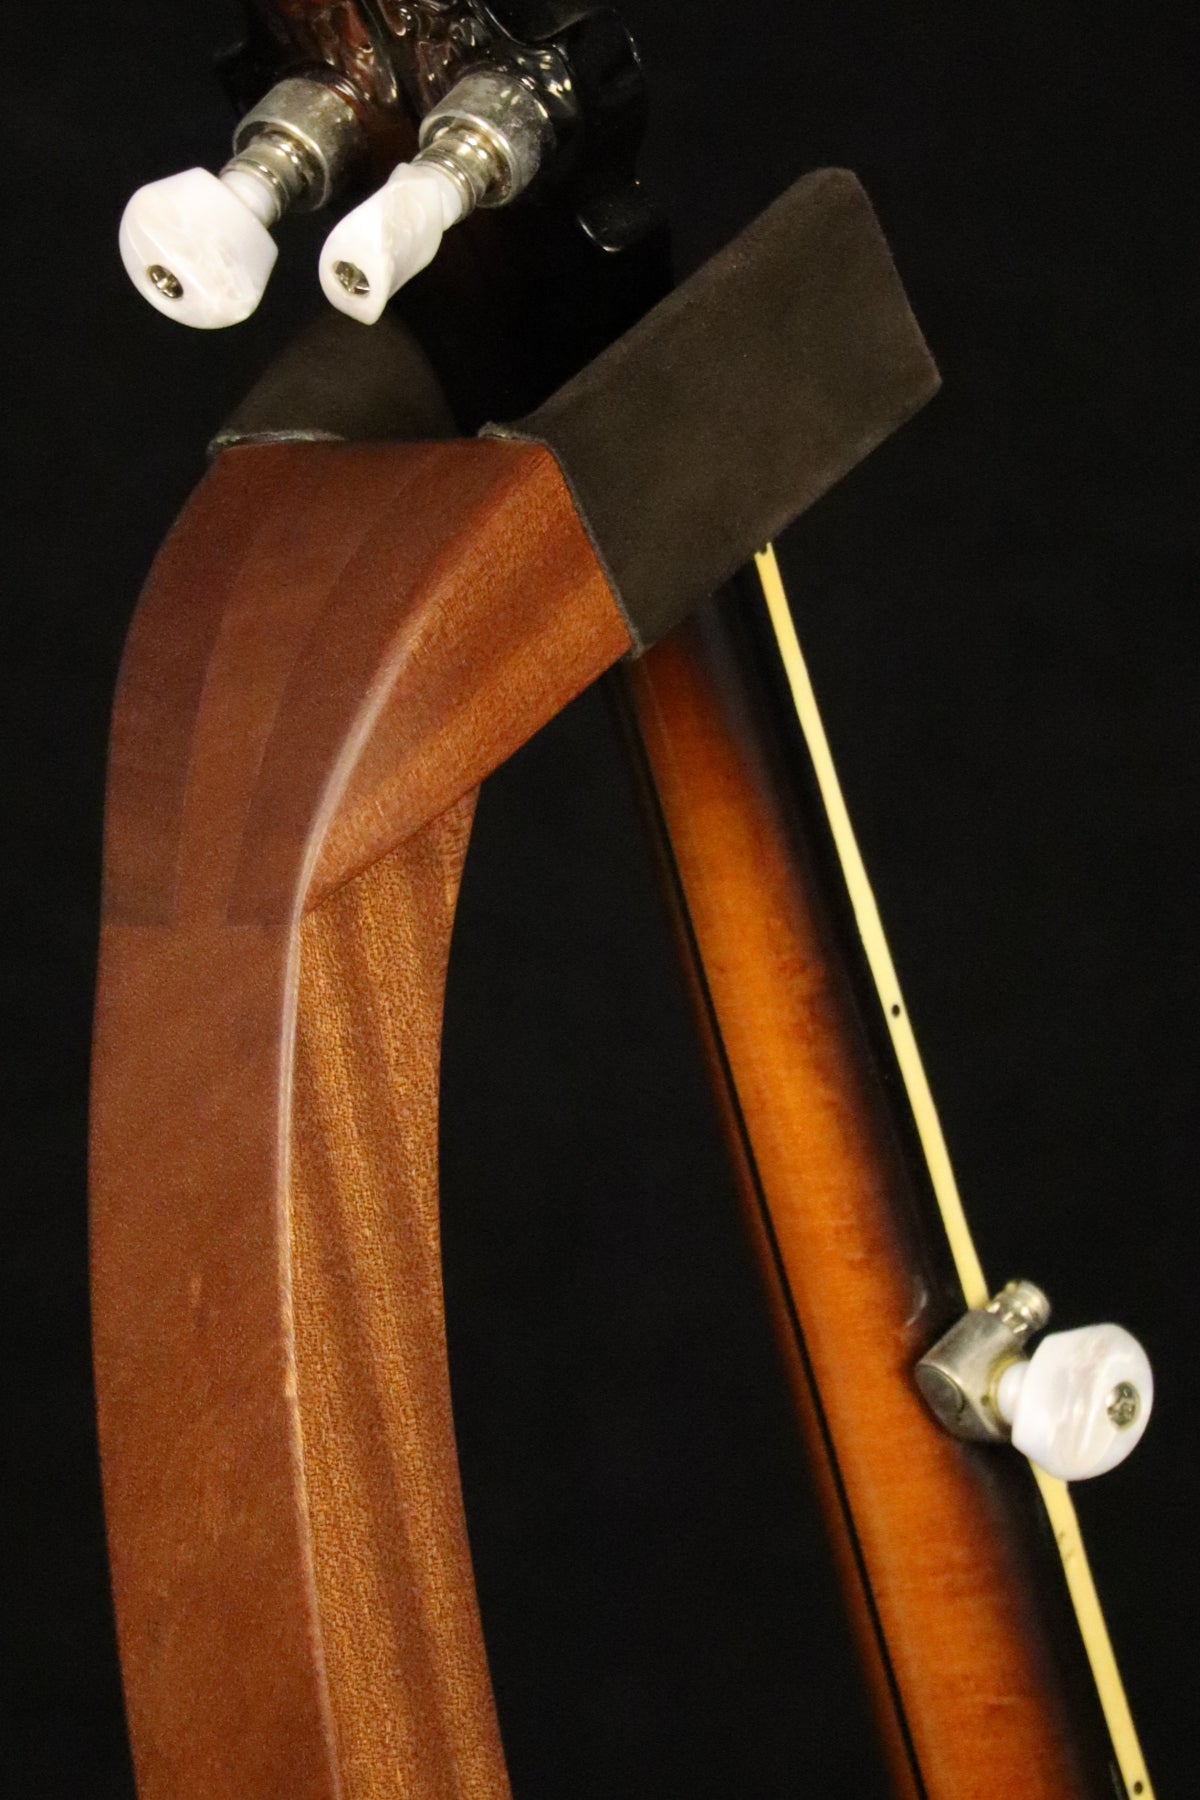 Folding sapele mahogany wood banjo floor stand yoke detail image with Alvarez banjo